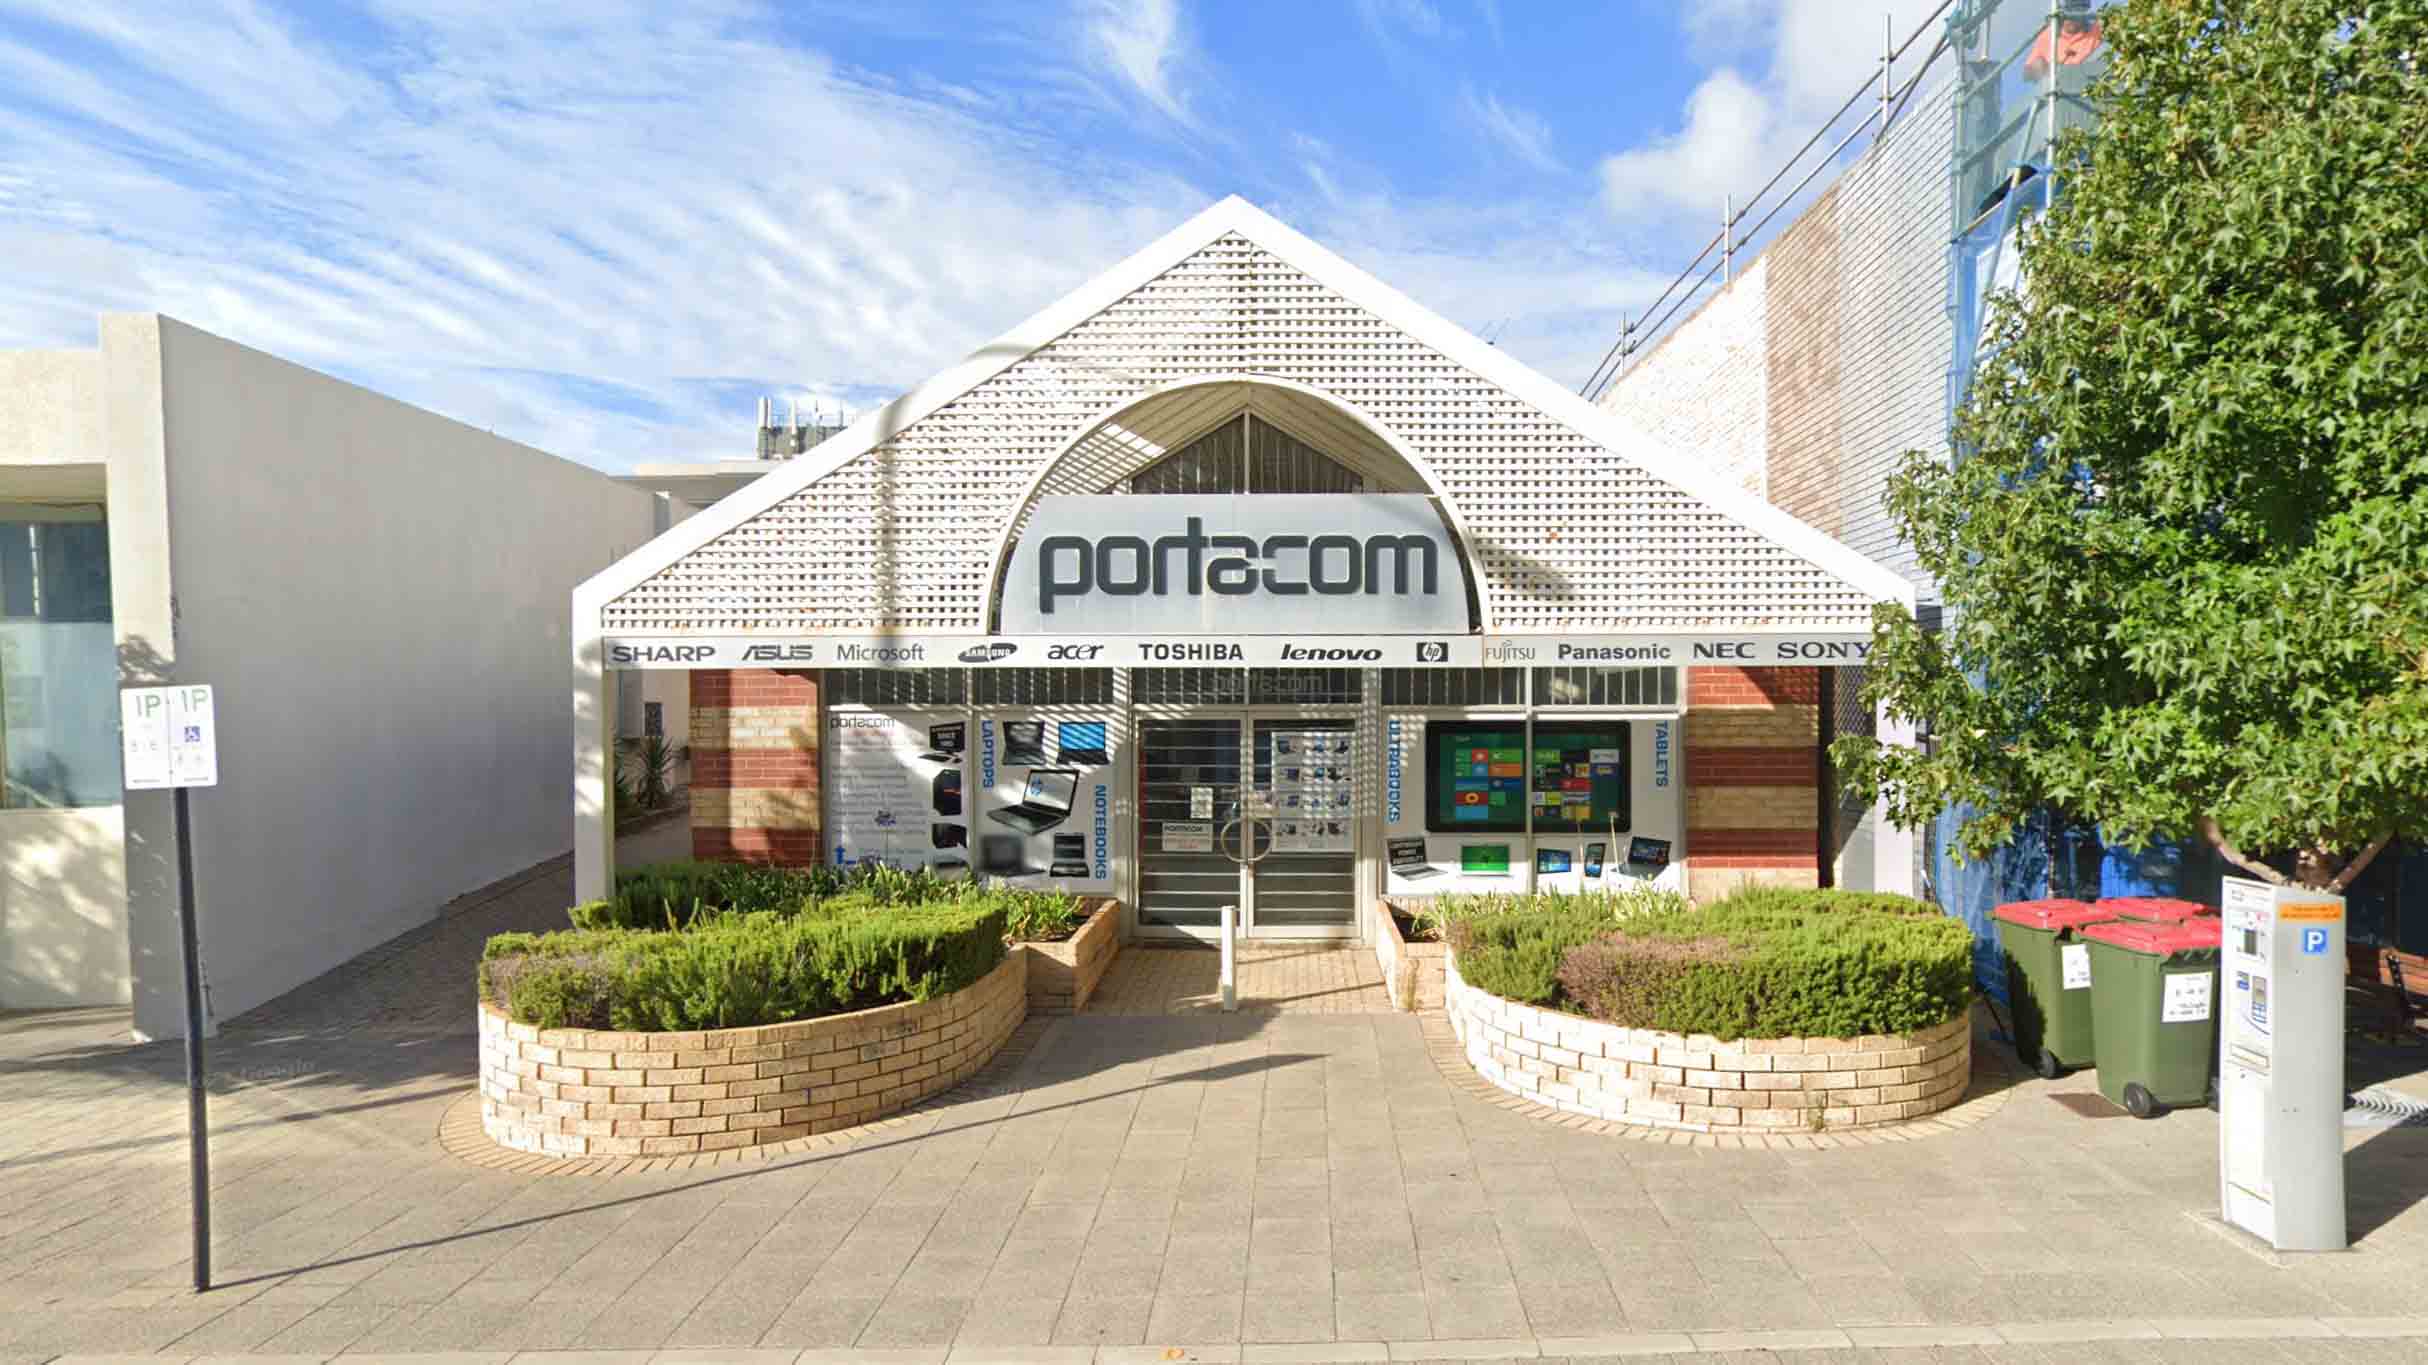 Portacom Data Recovery in Perth